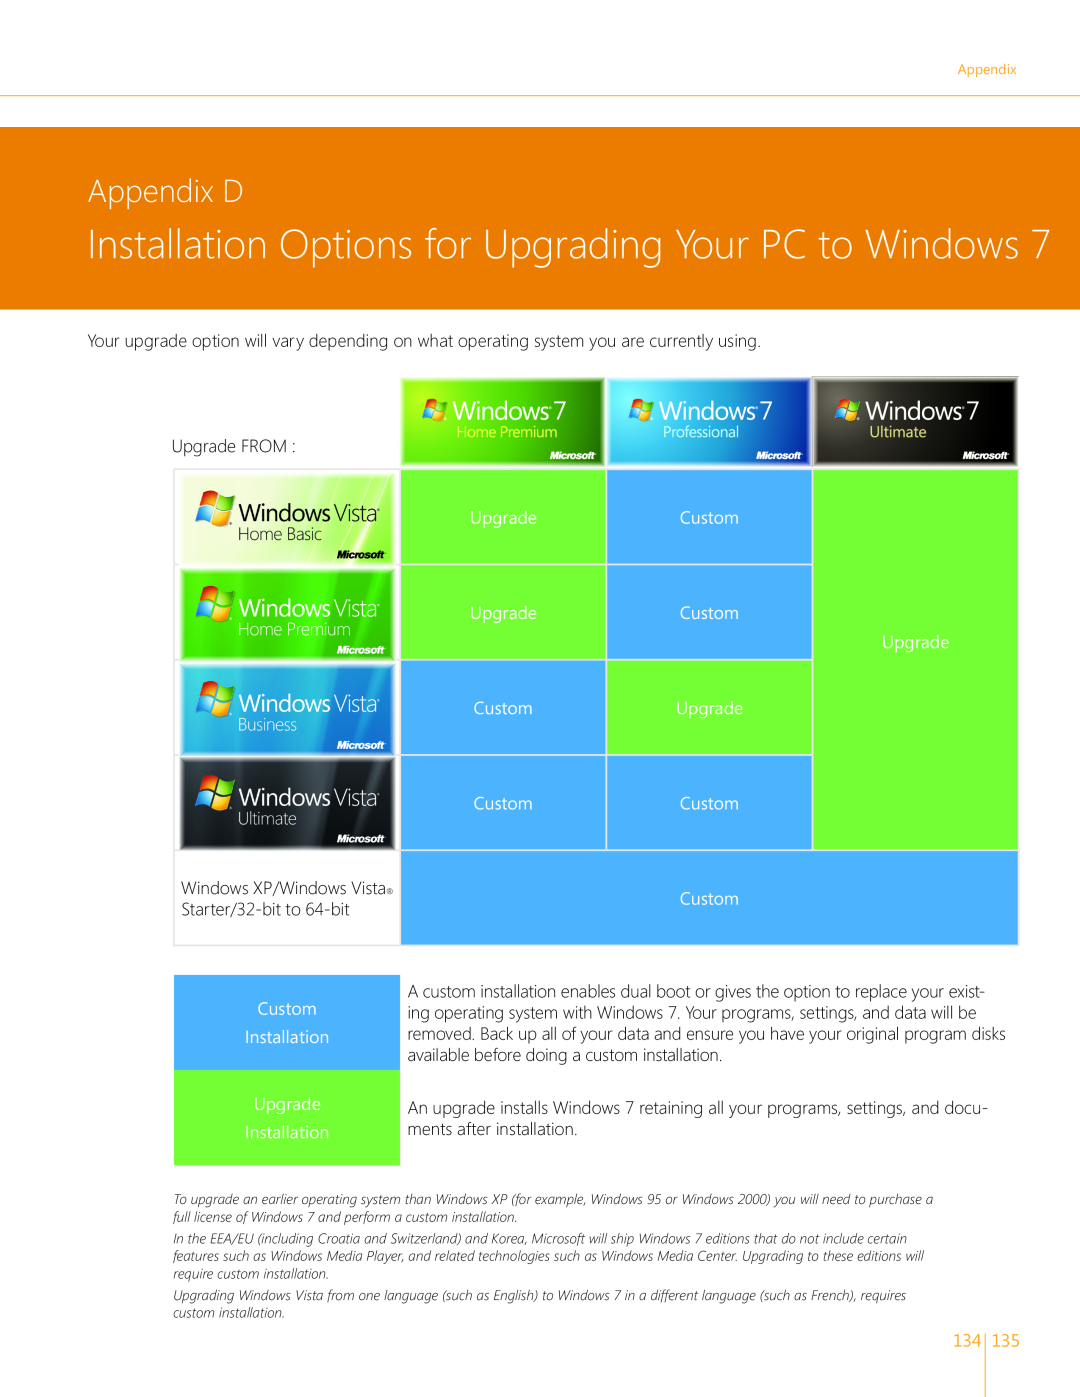 Microsoft QGF00154, GLC00182, GLC01878, GLC00184, GFC00941 Appendix D, Installation Options for Upgrading Your PC to Windows 